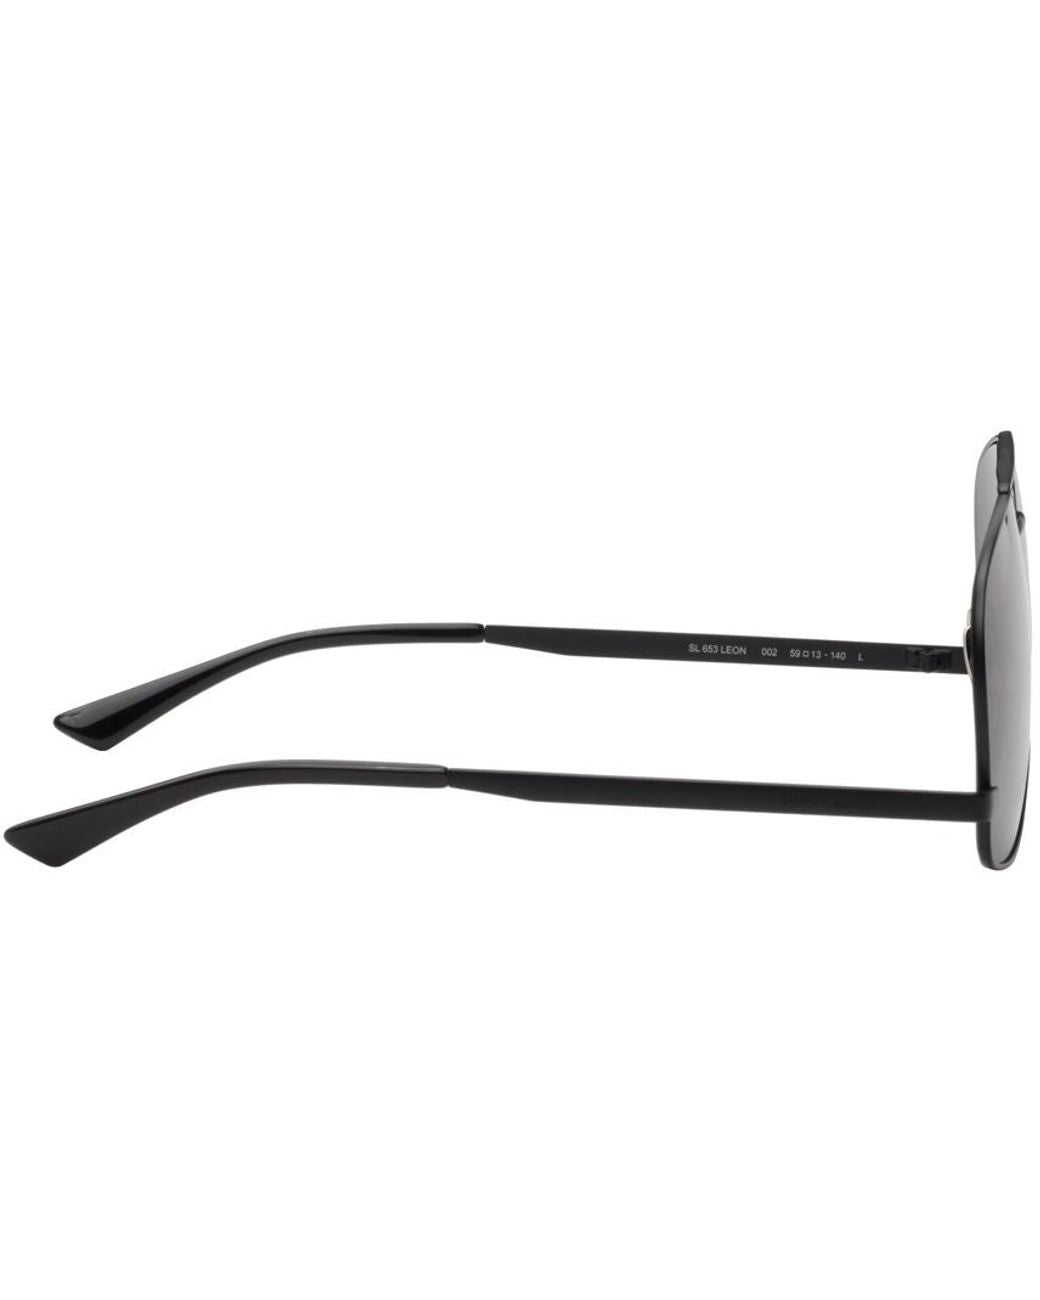 Yvest Saint Laurent SL-653-LEON-002 59mm New Sunglasses